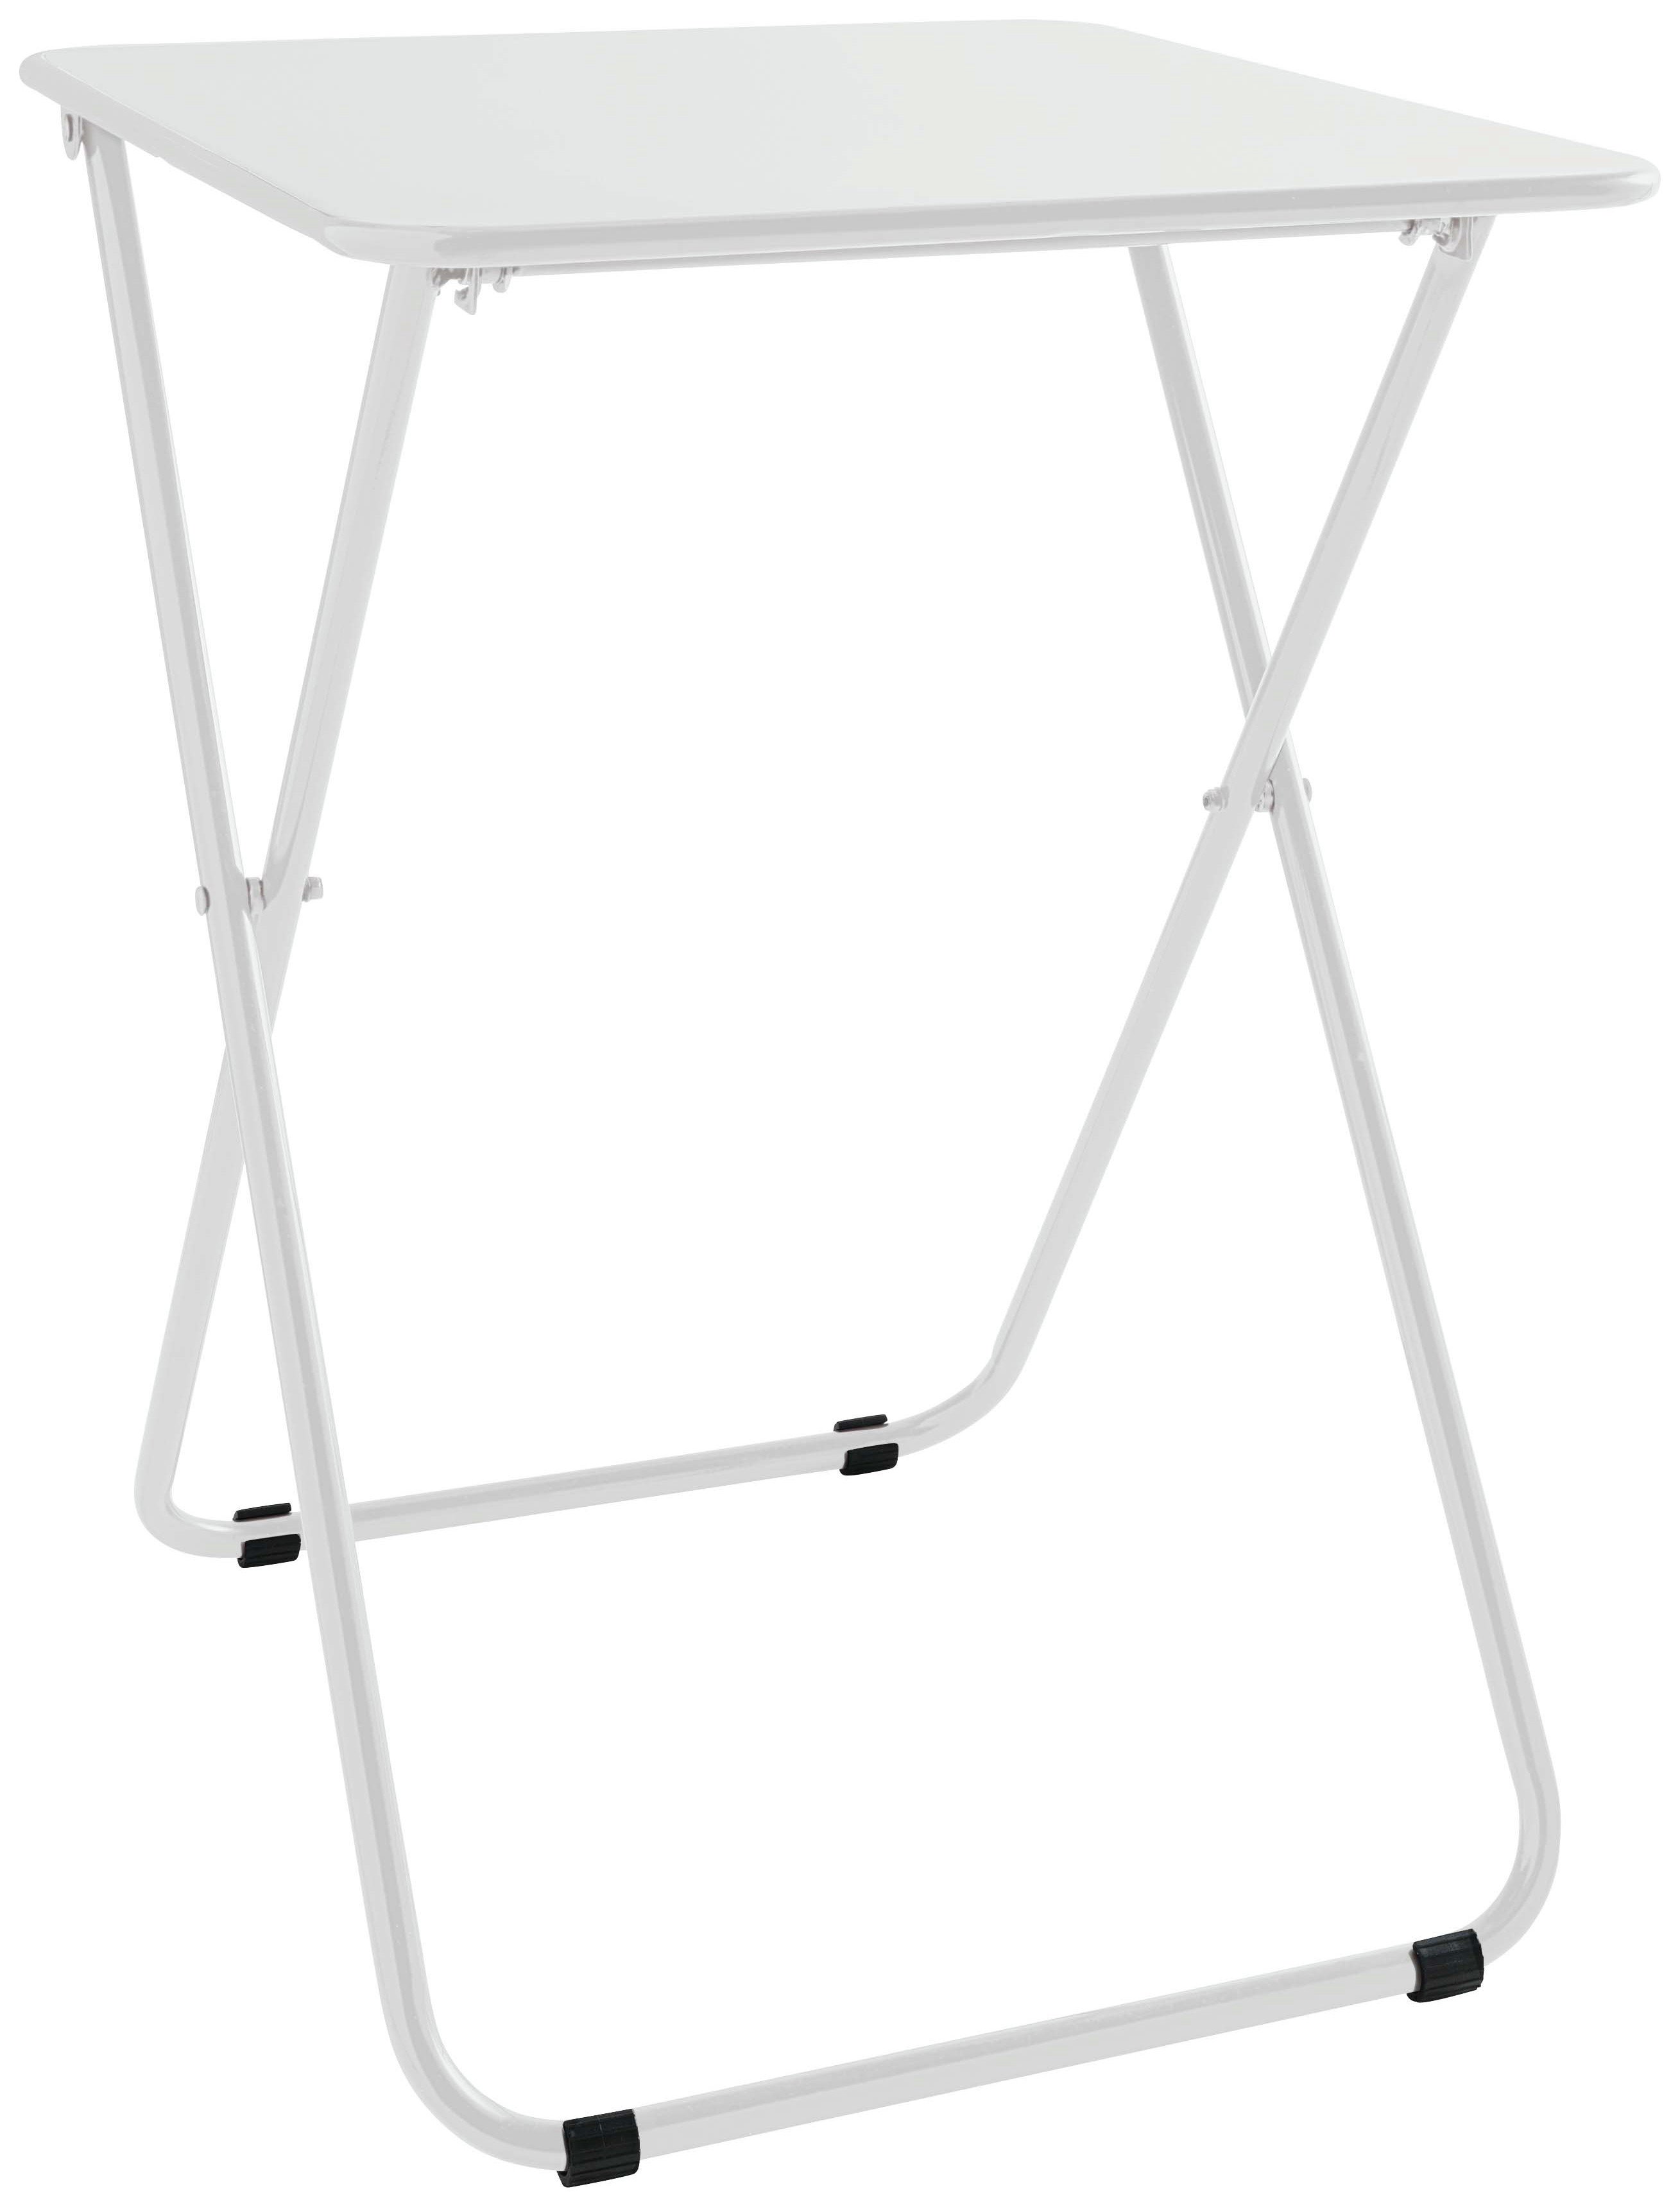 Habitat Airo Foldable Metal 2 Seater Dining Table - White